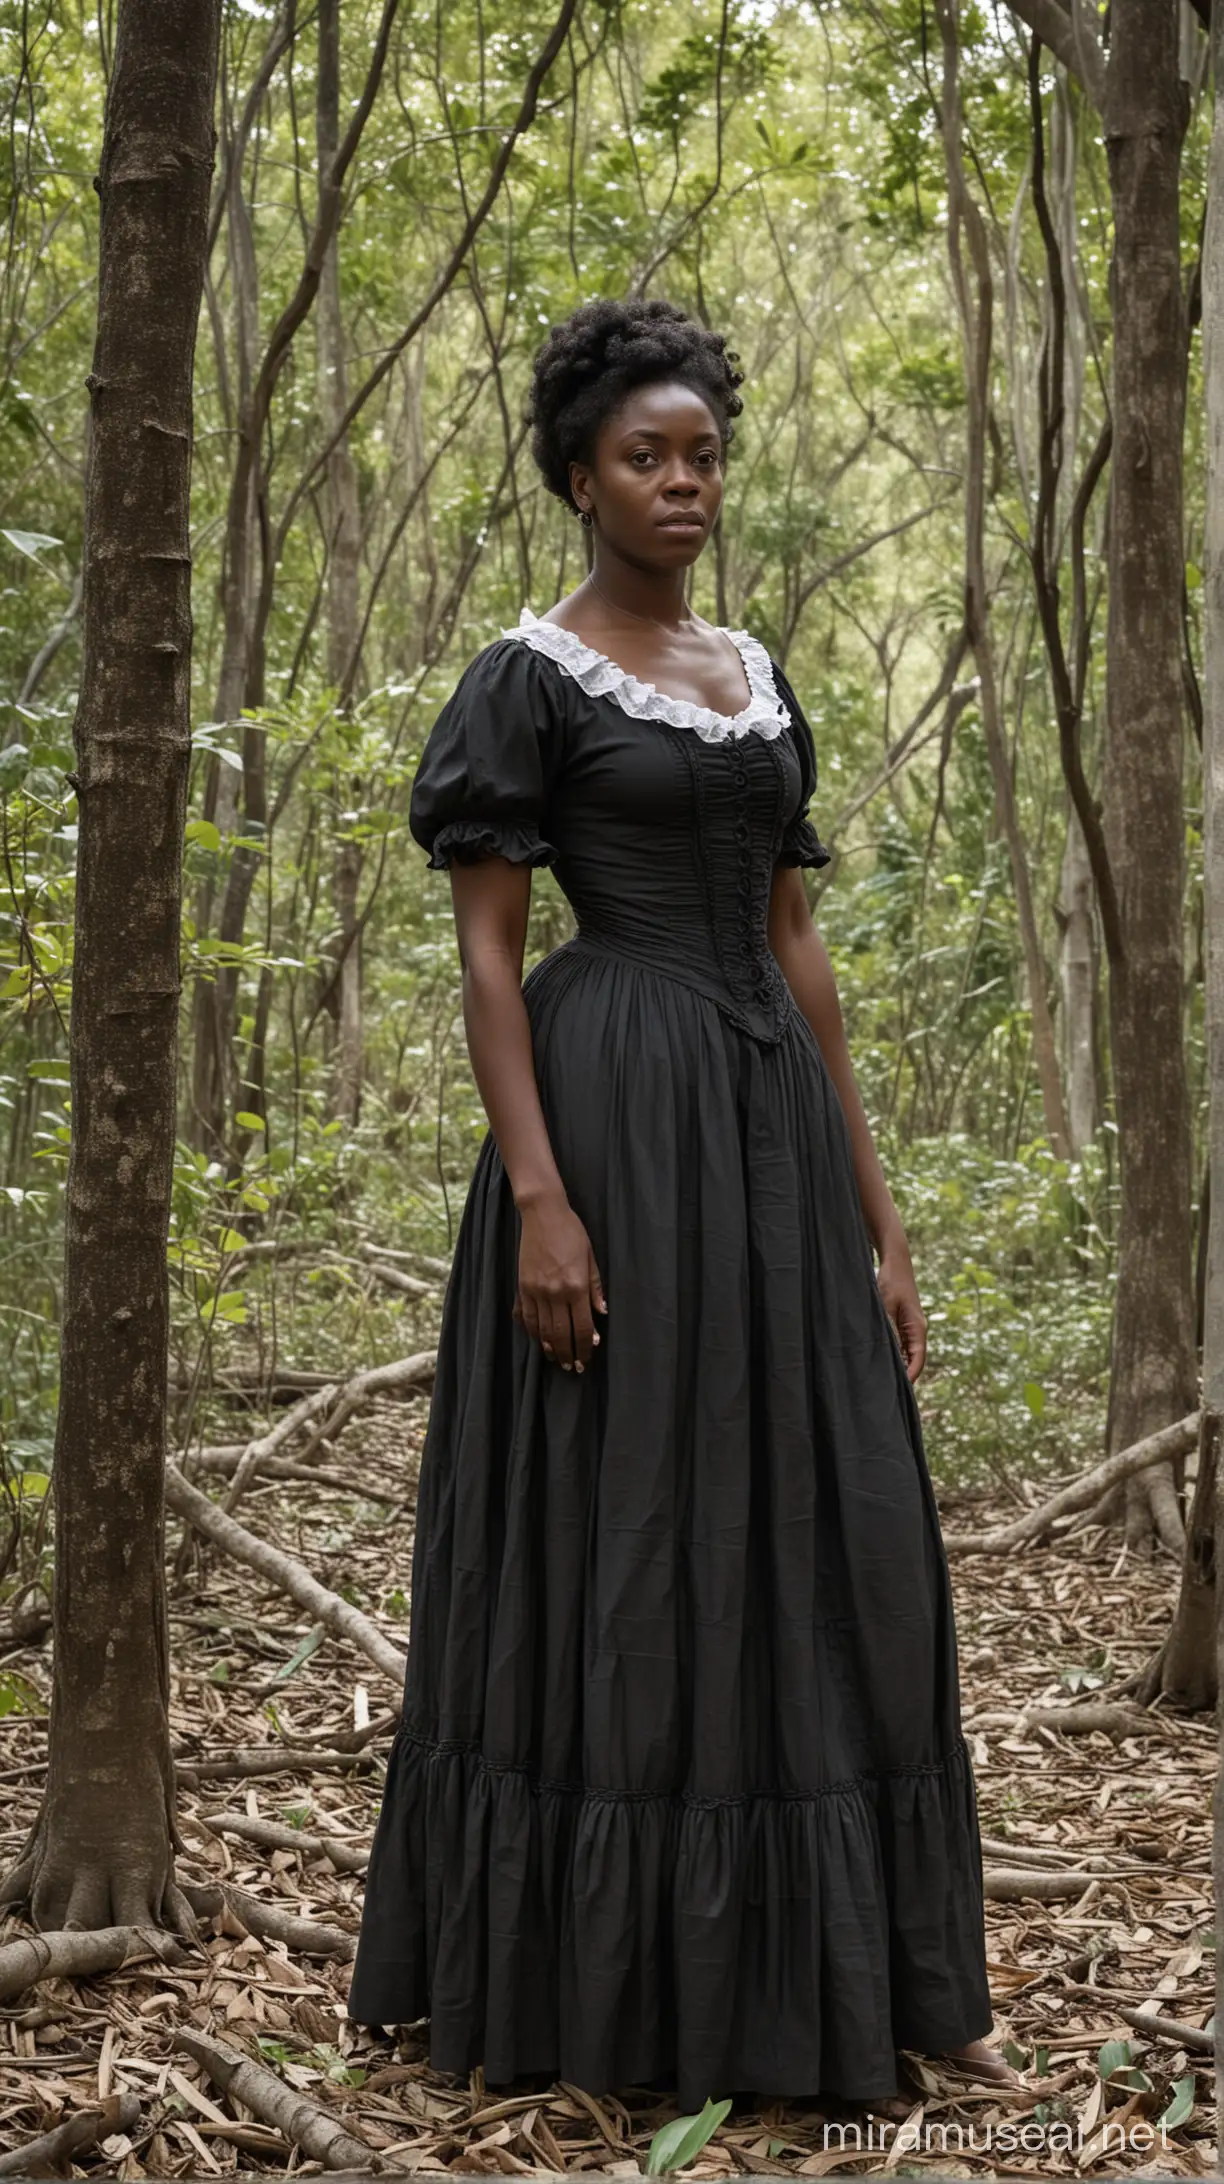 1800s Black female in the woods in cartagena 



